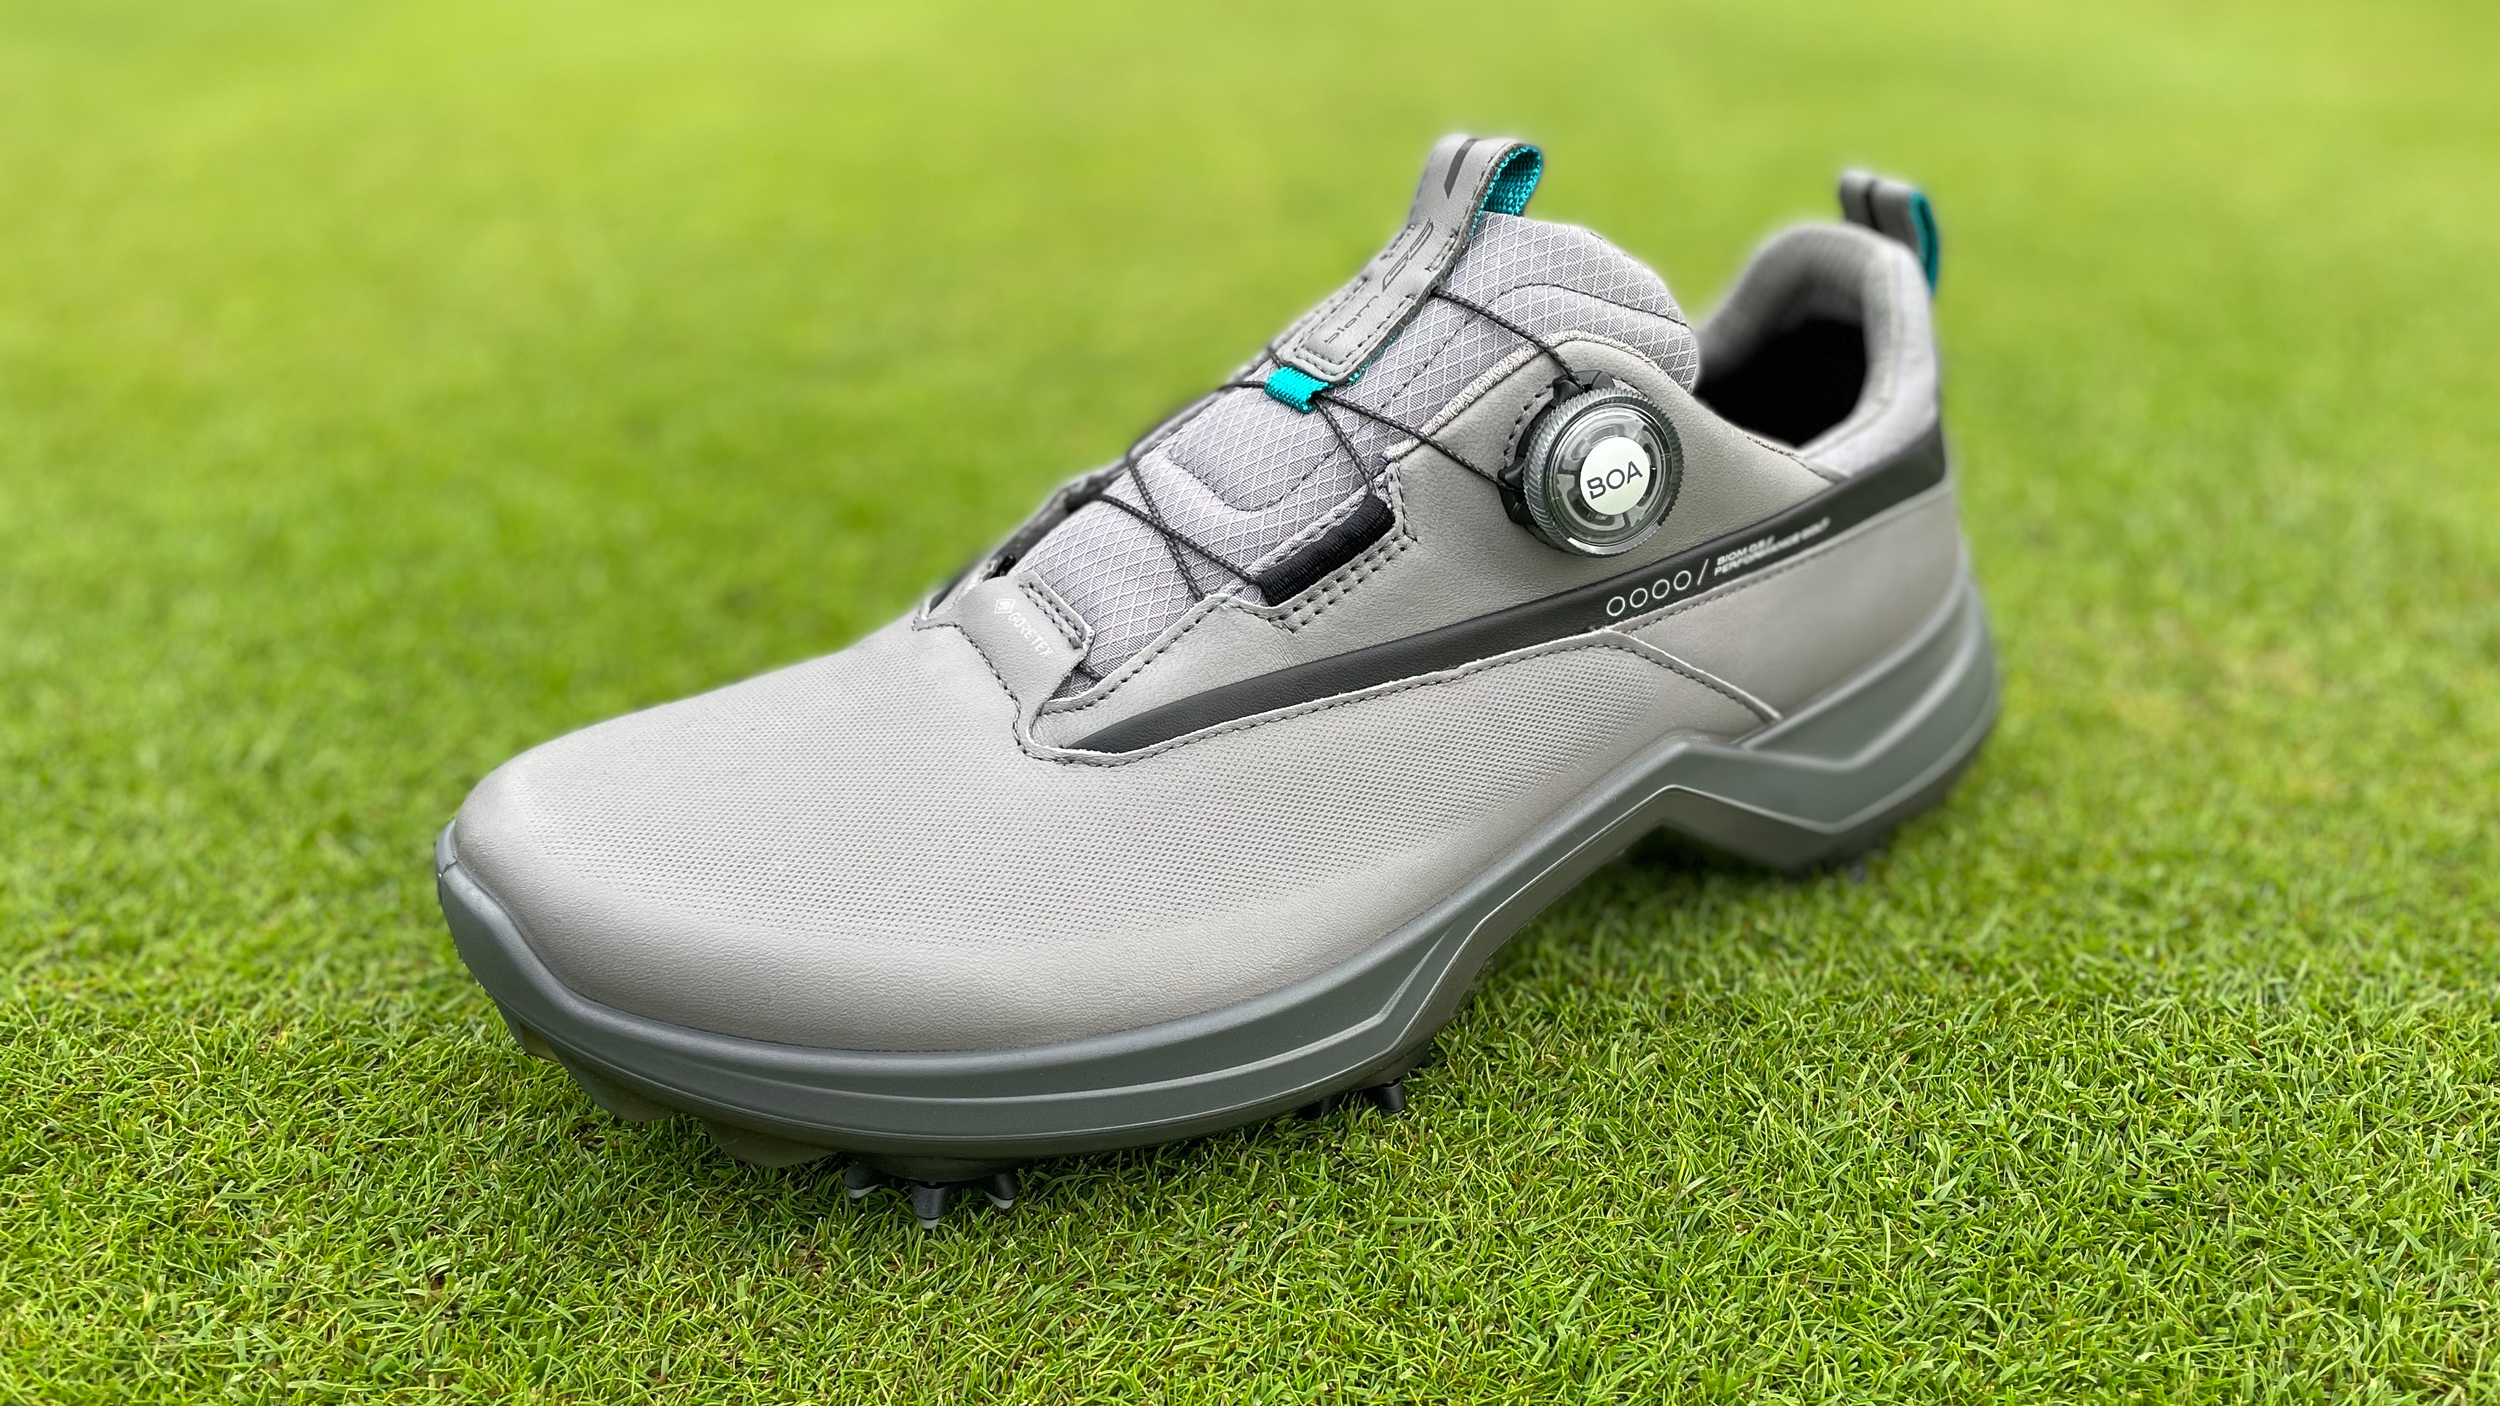 Ecco G5 Shoe Review Golf